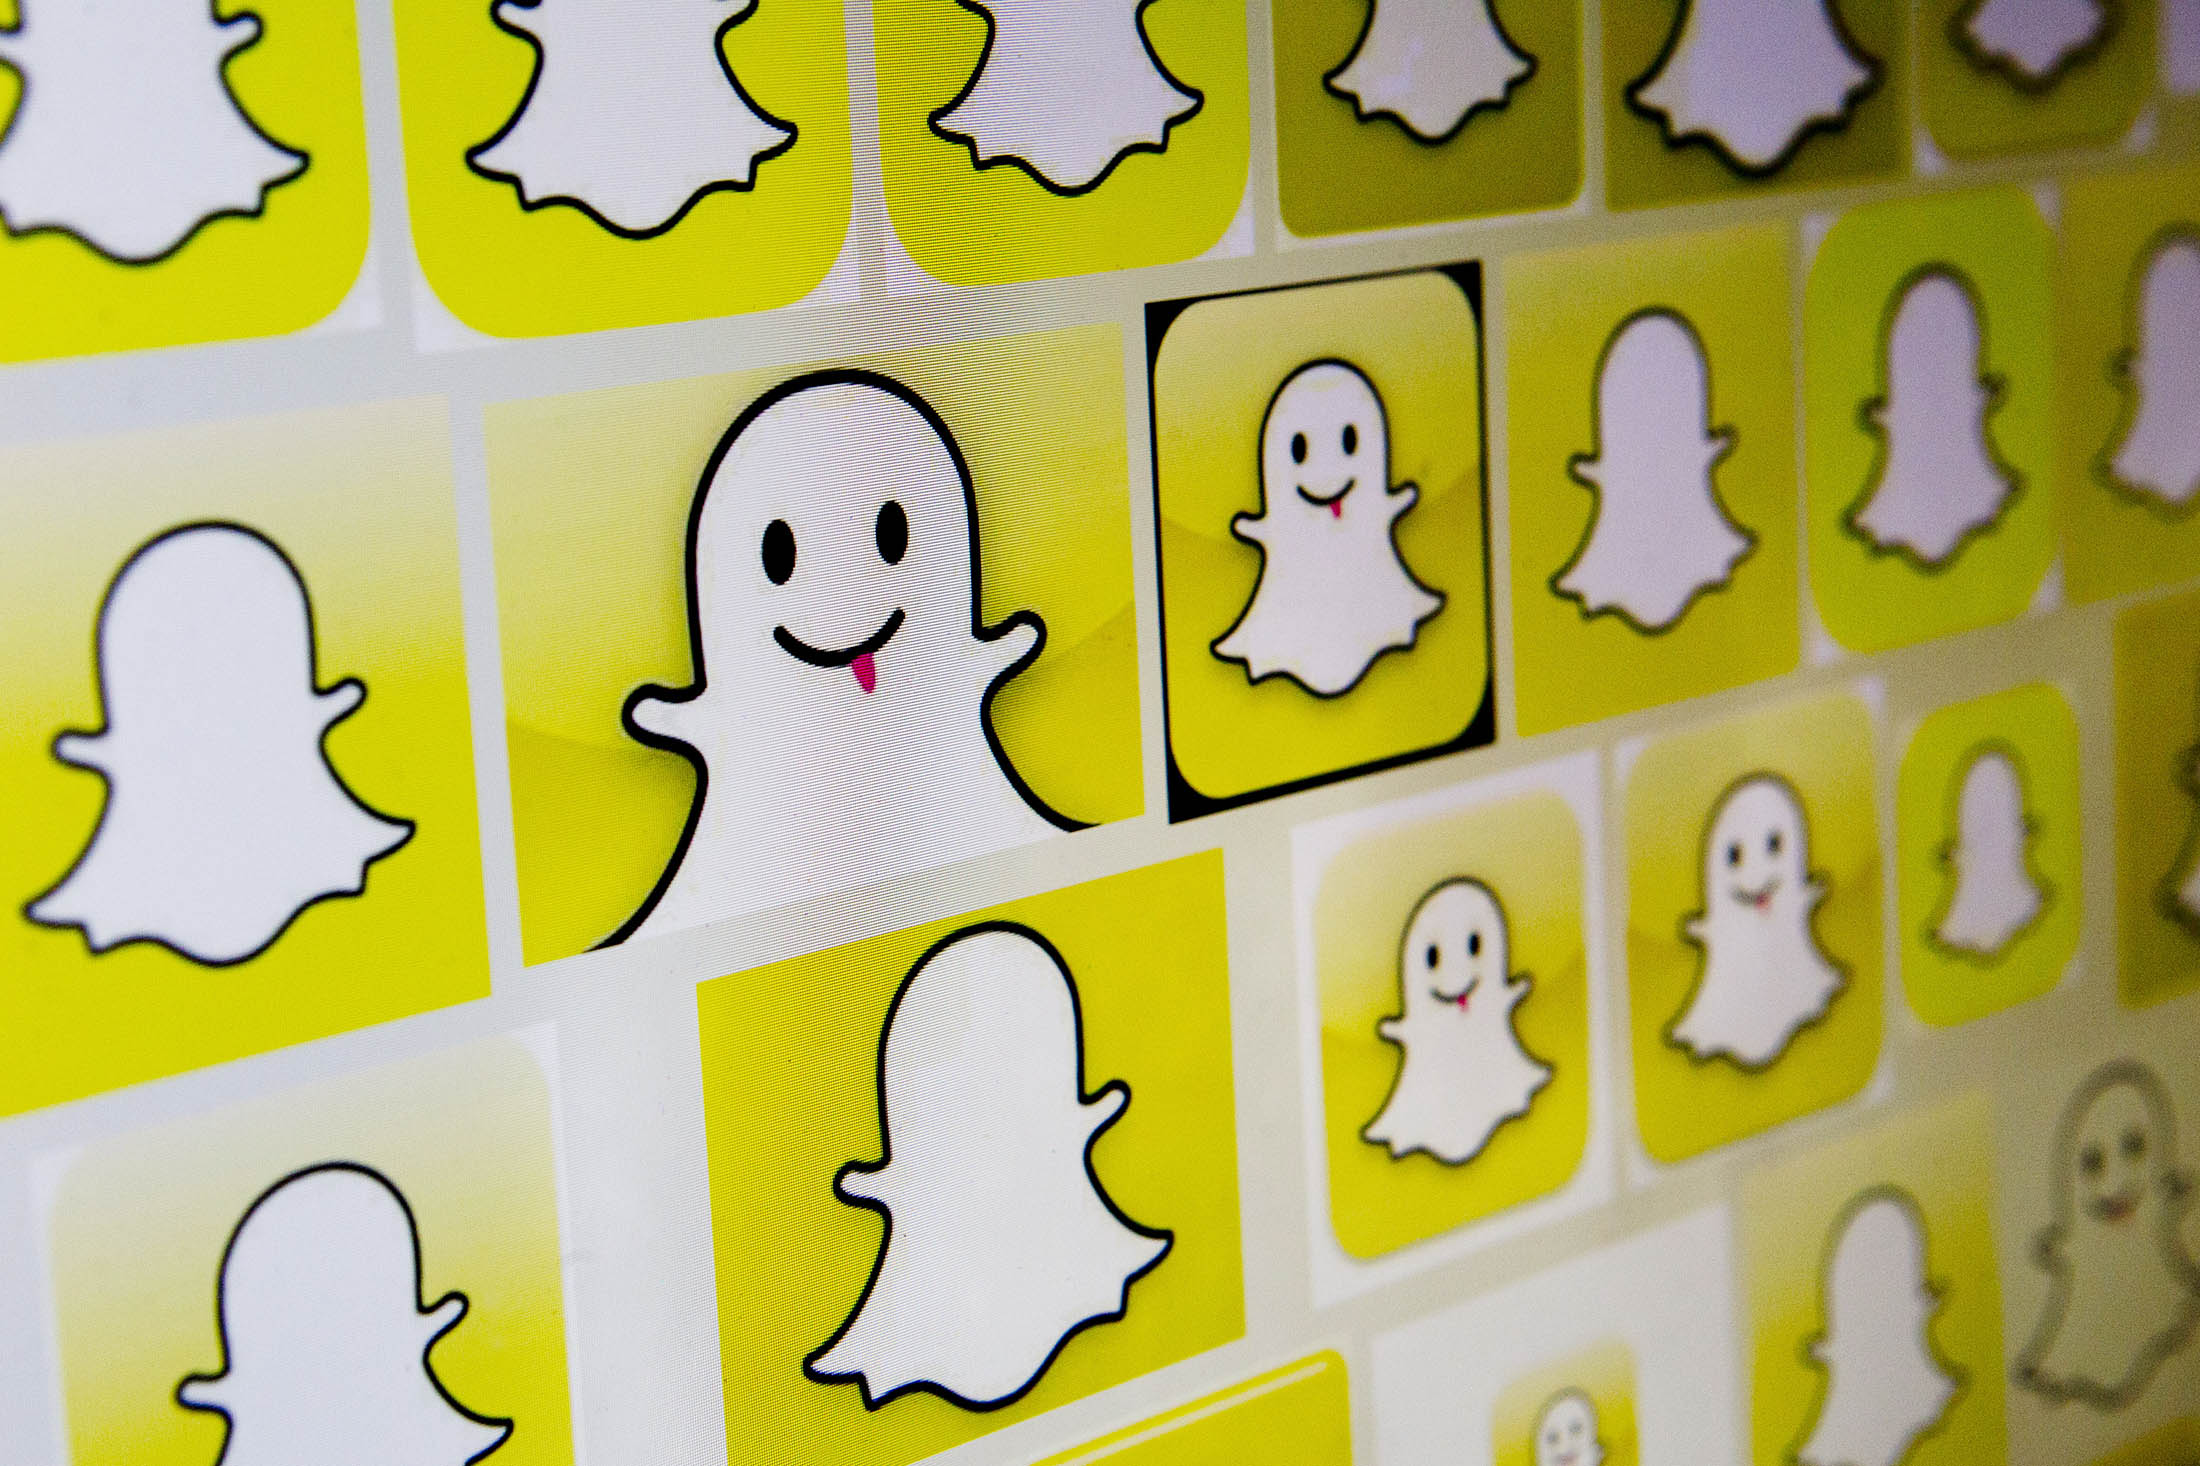 Snapchat Raising Money That Could Value Company At Up To $19 Billion